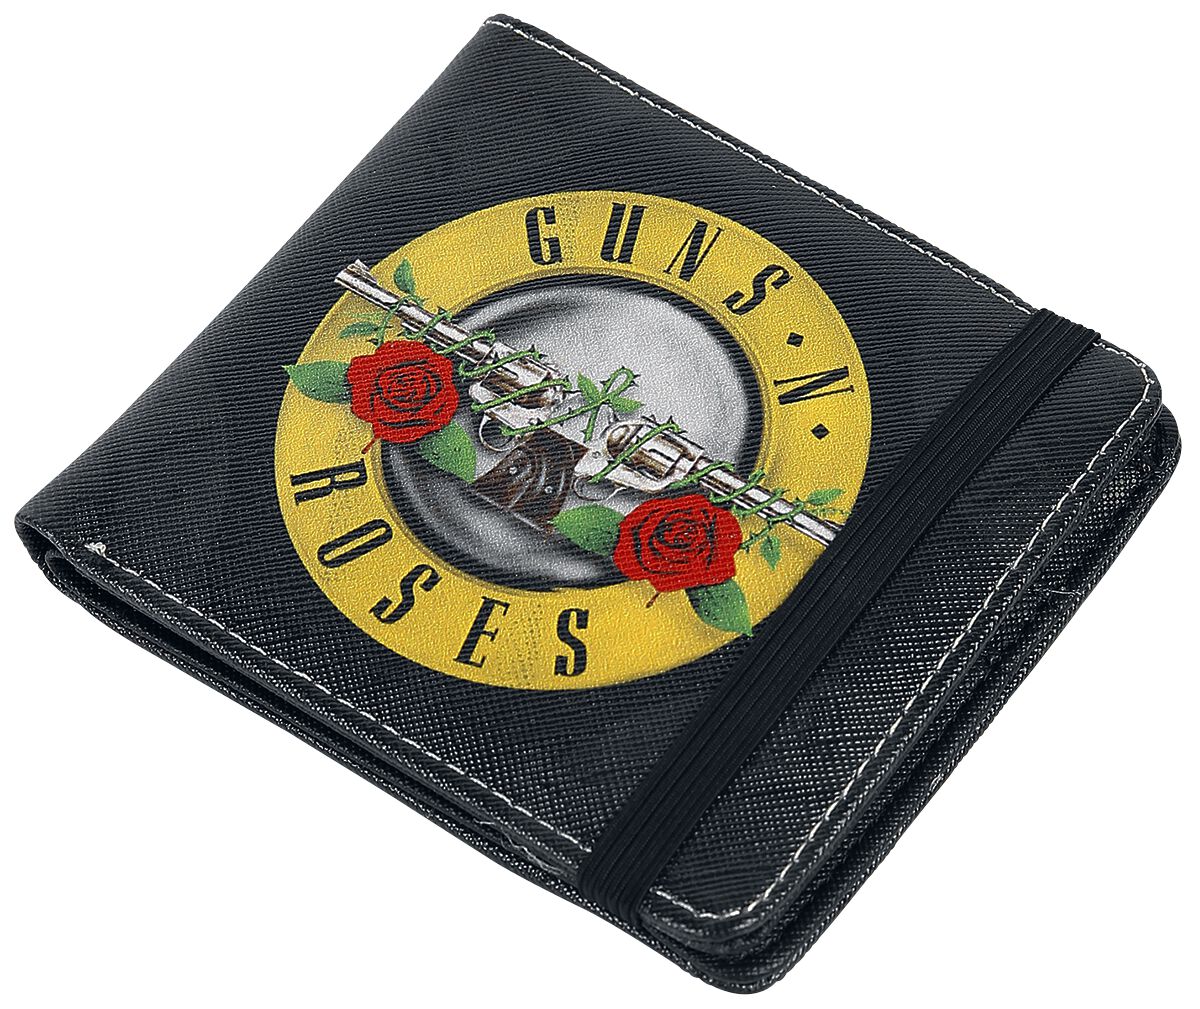 Guns N' Roses Guns N' Roses Logo Wallet black